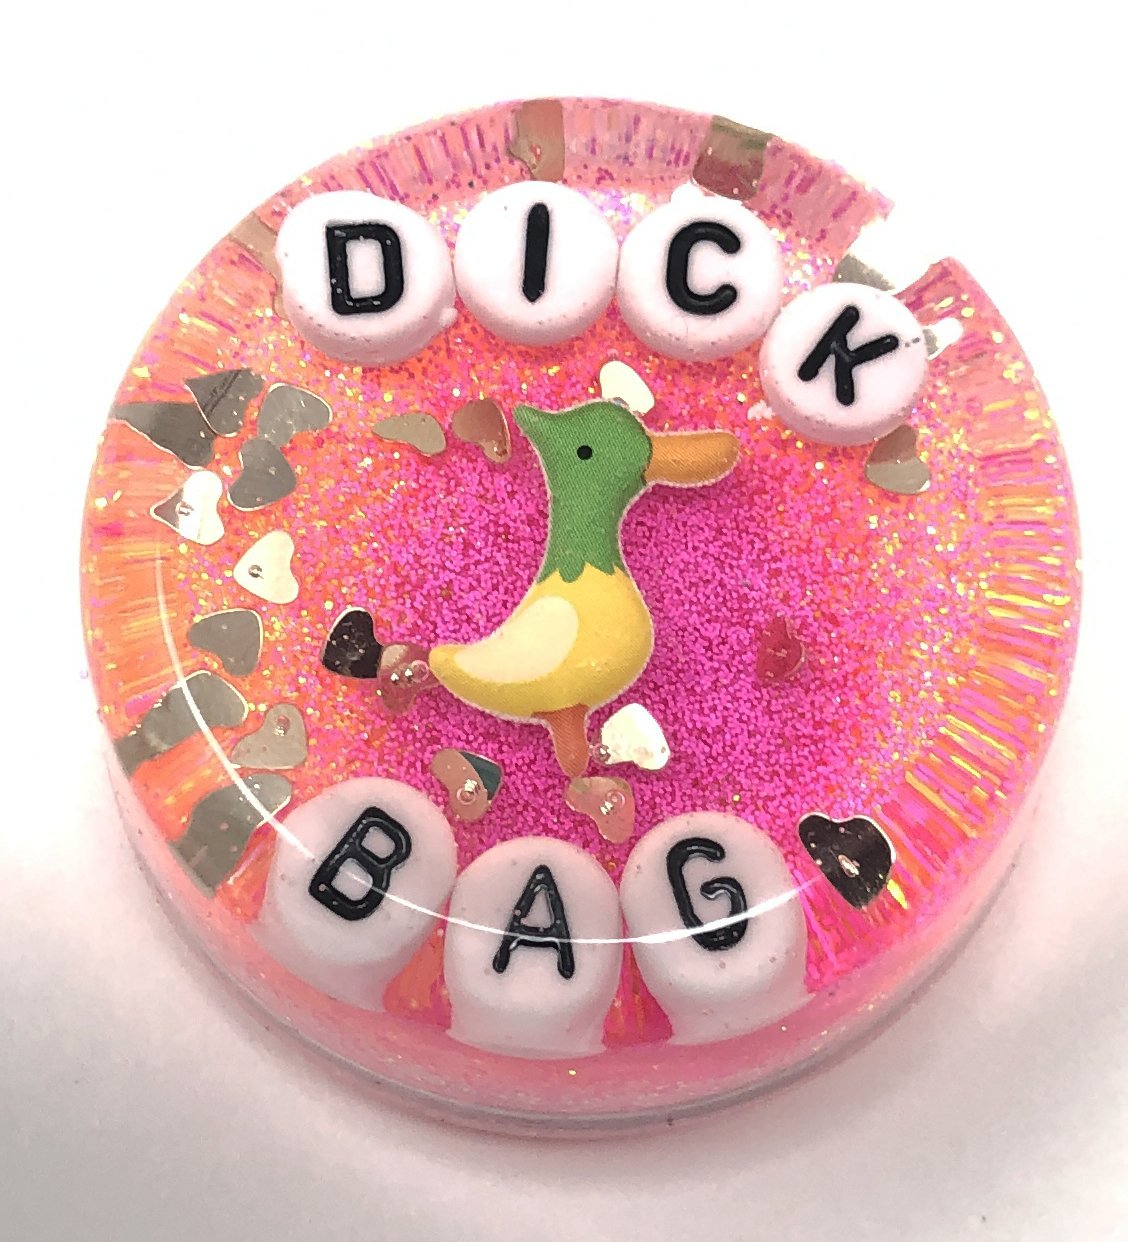 Dick Bag - Shower Art - READY TO SHIP